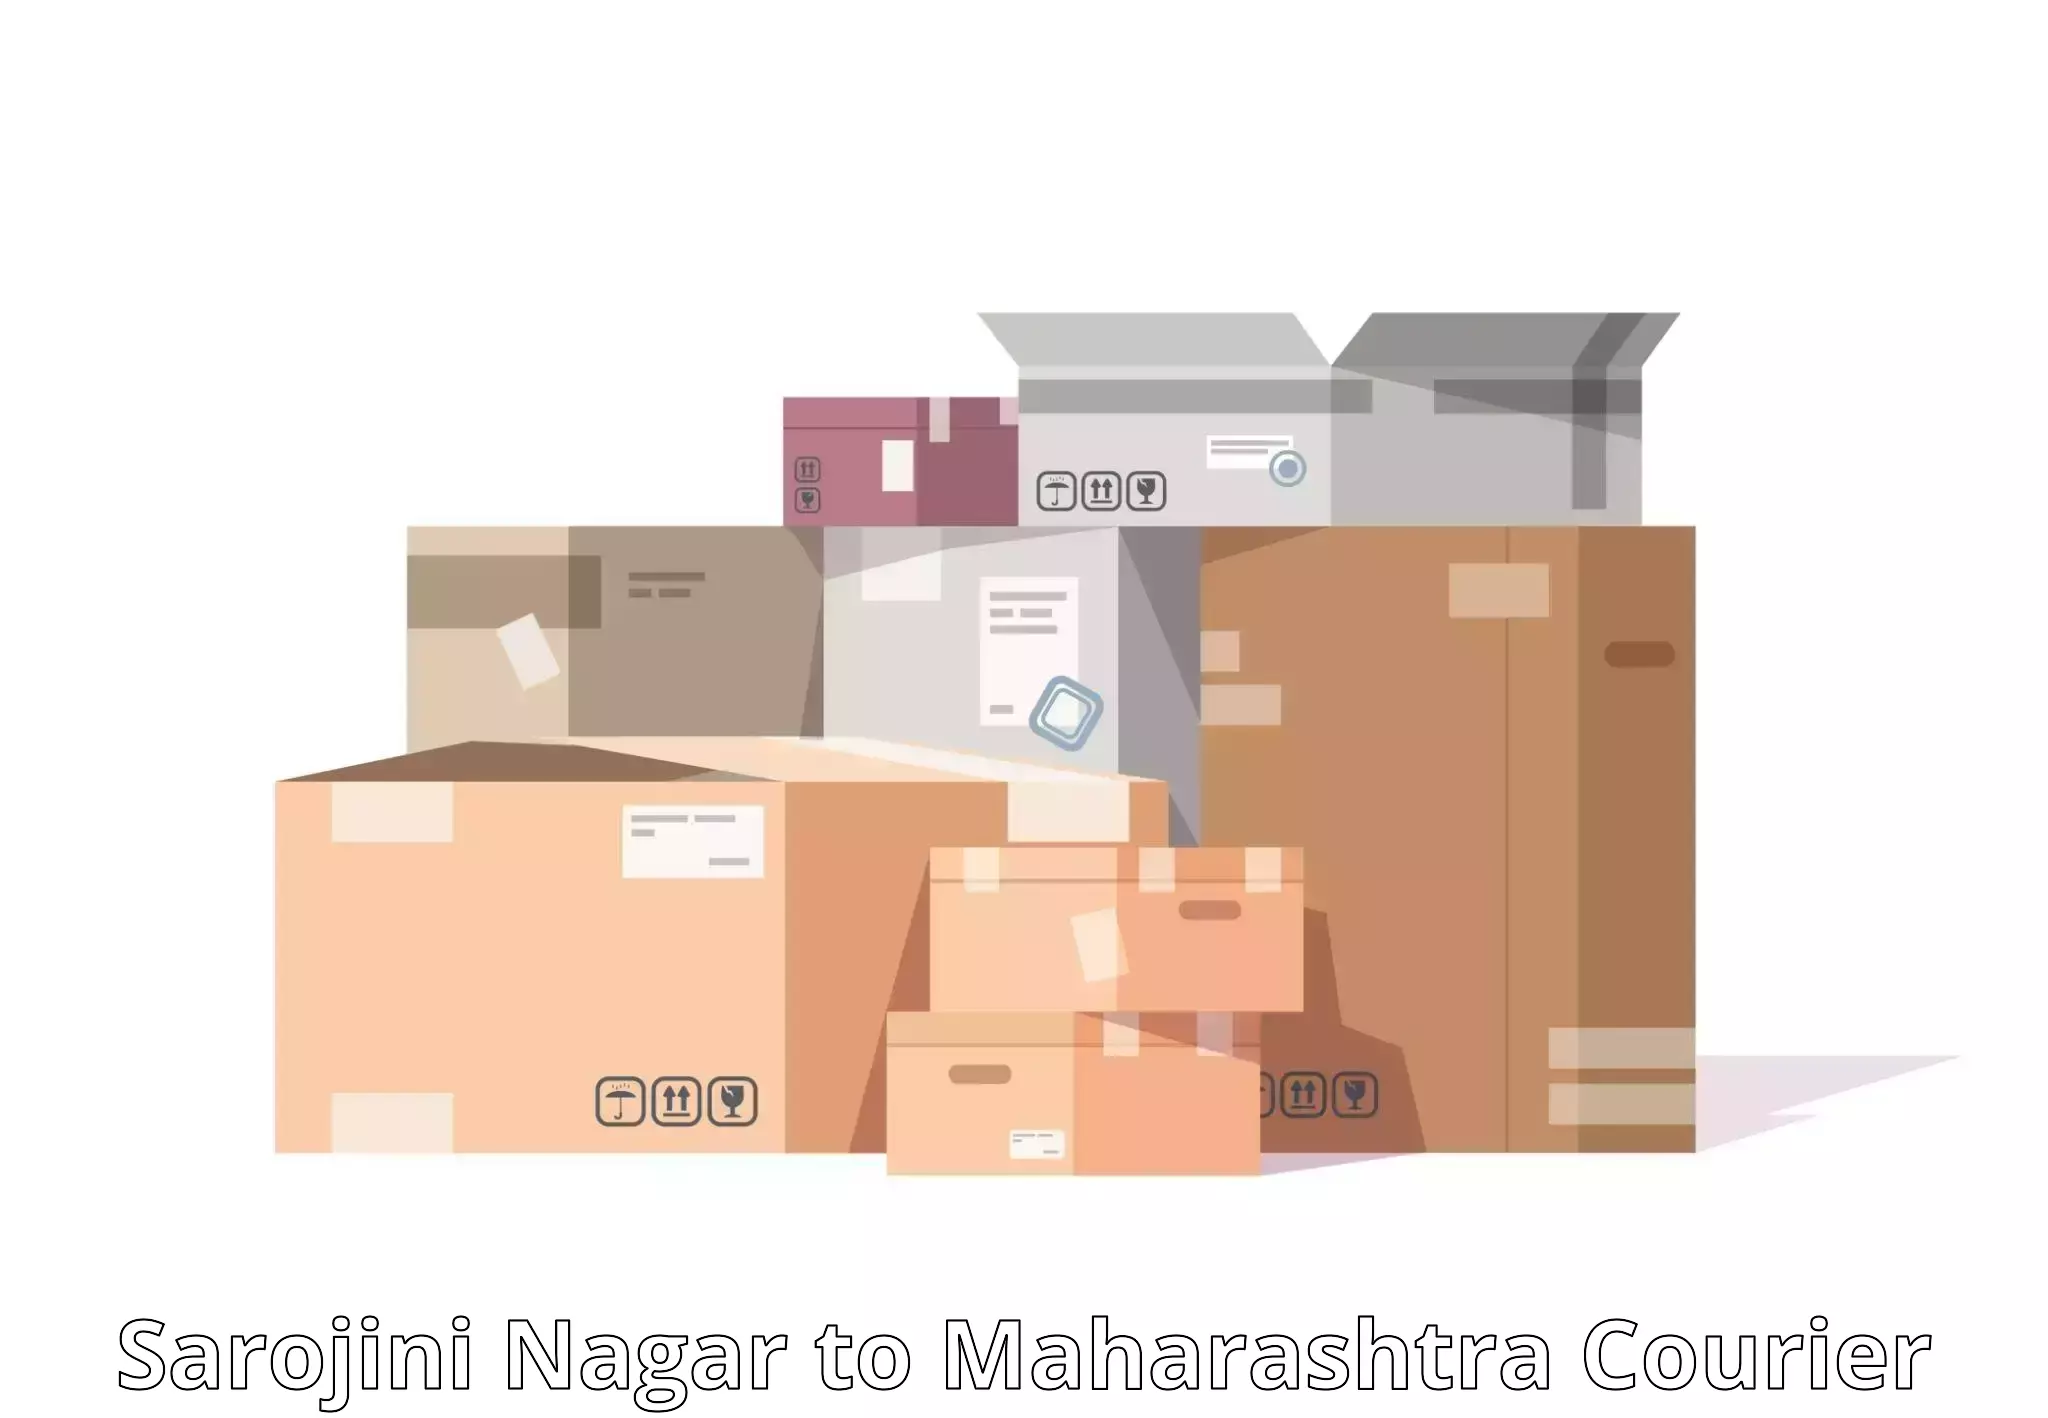 Courier service innovation Sarojini Nagar to Ambegaon